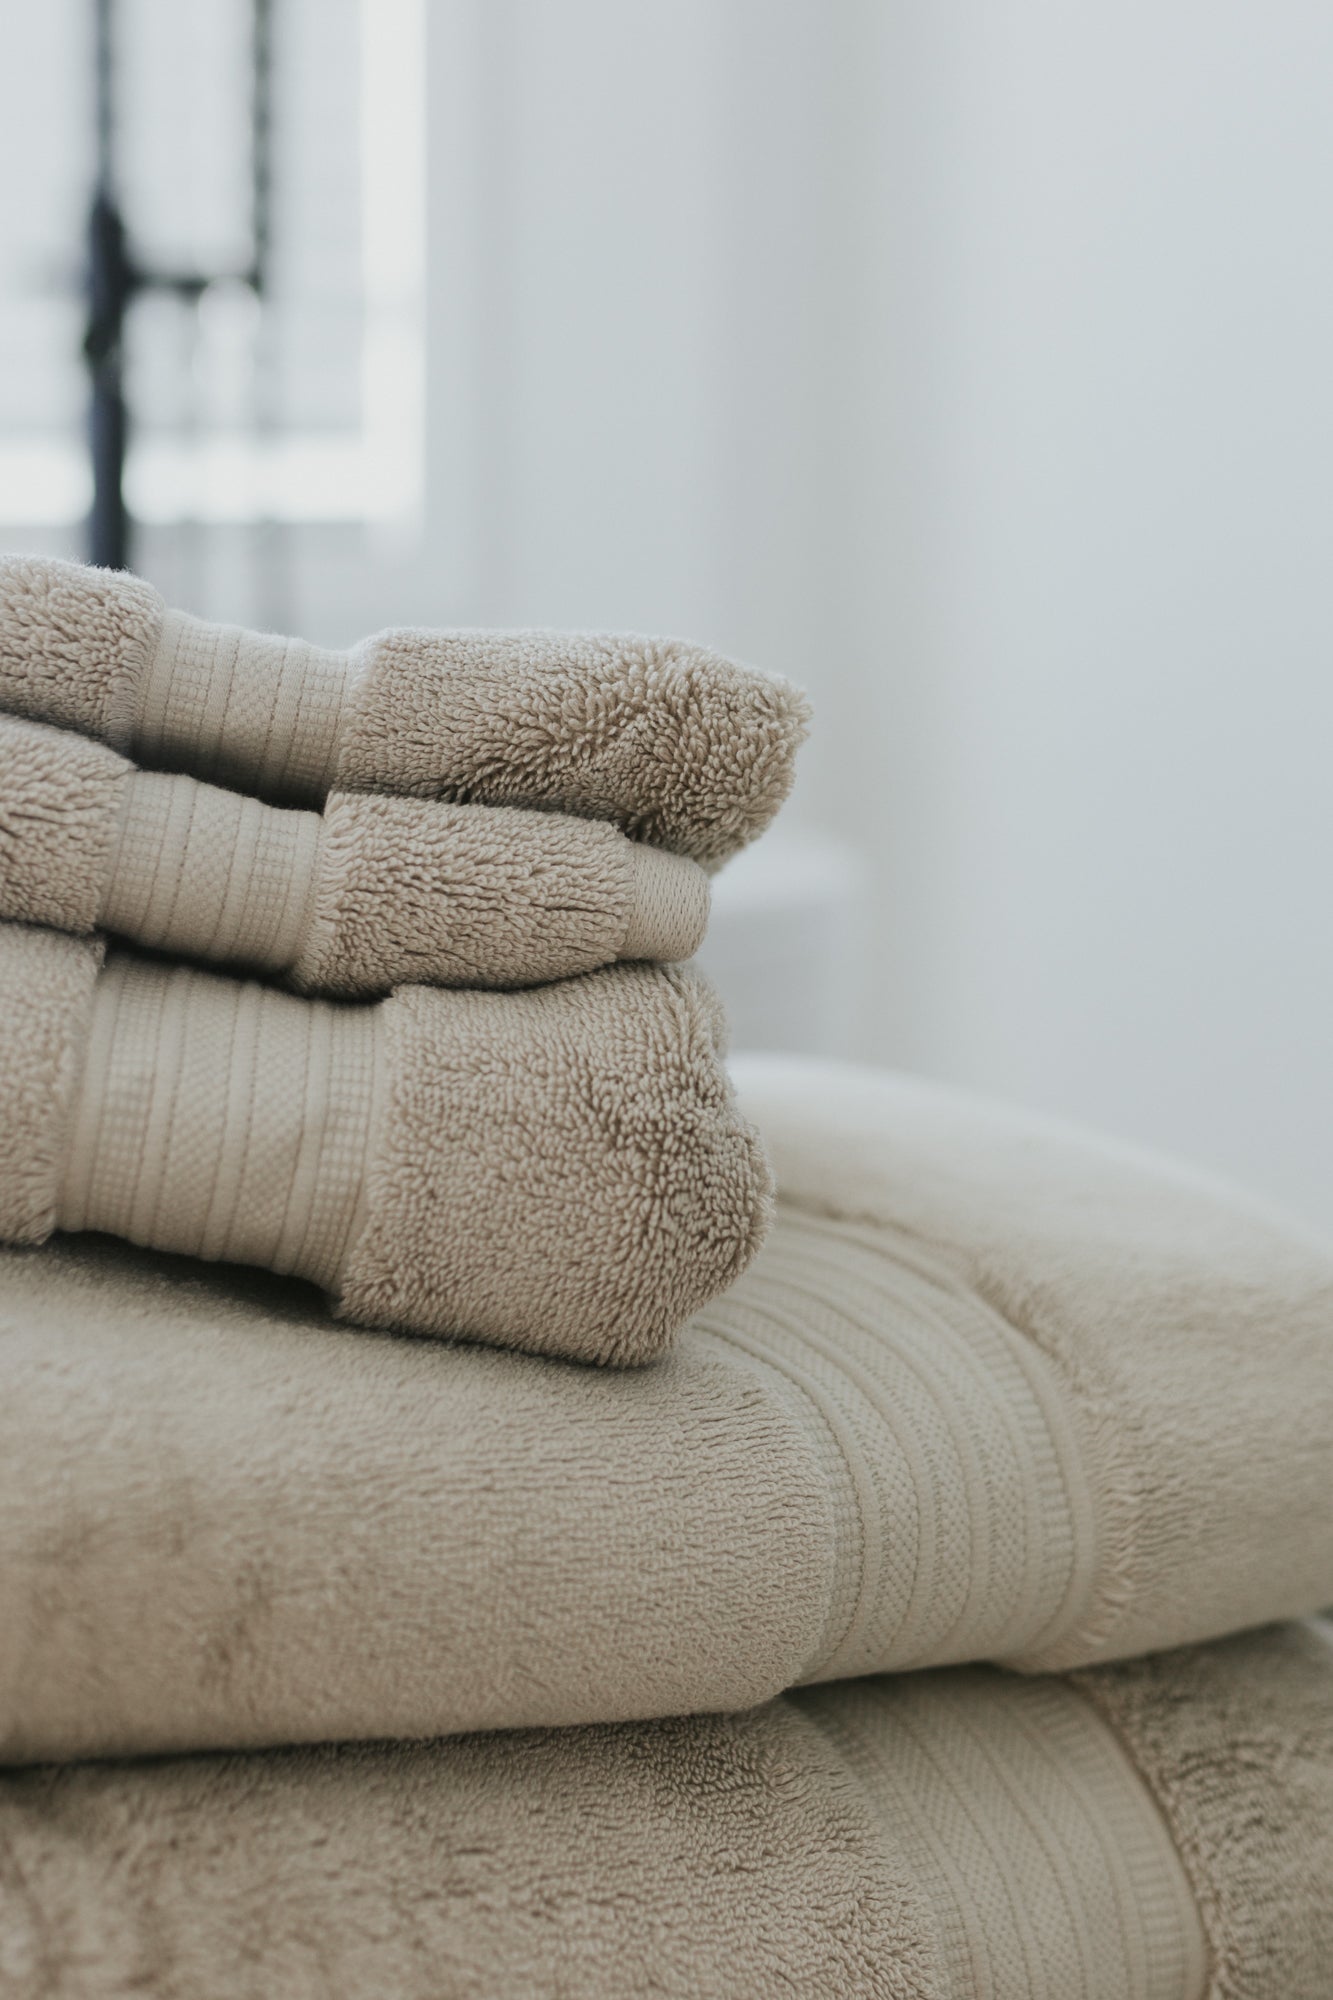 Hotel Collection 900 GSM Long Staple Combed Cotton 2-Piece Bath Towel Set White/Latte, Beige